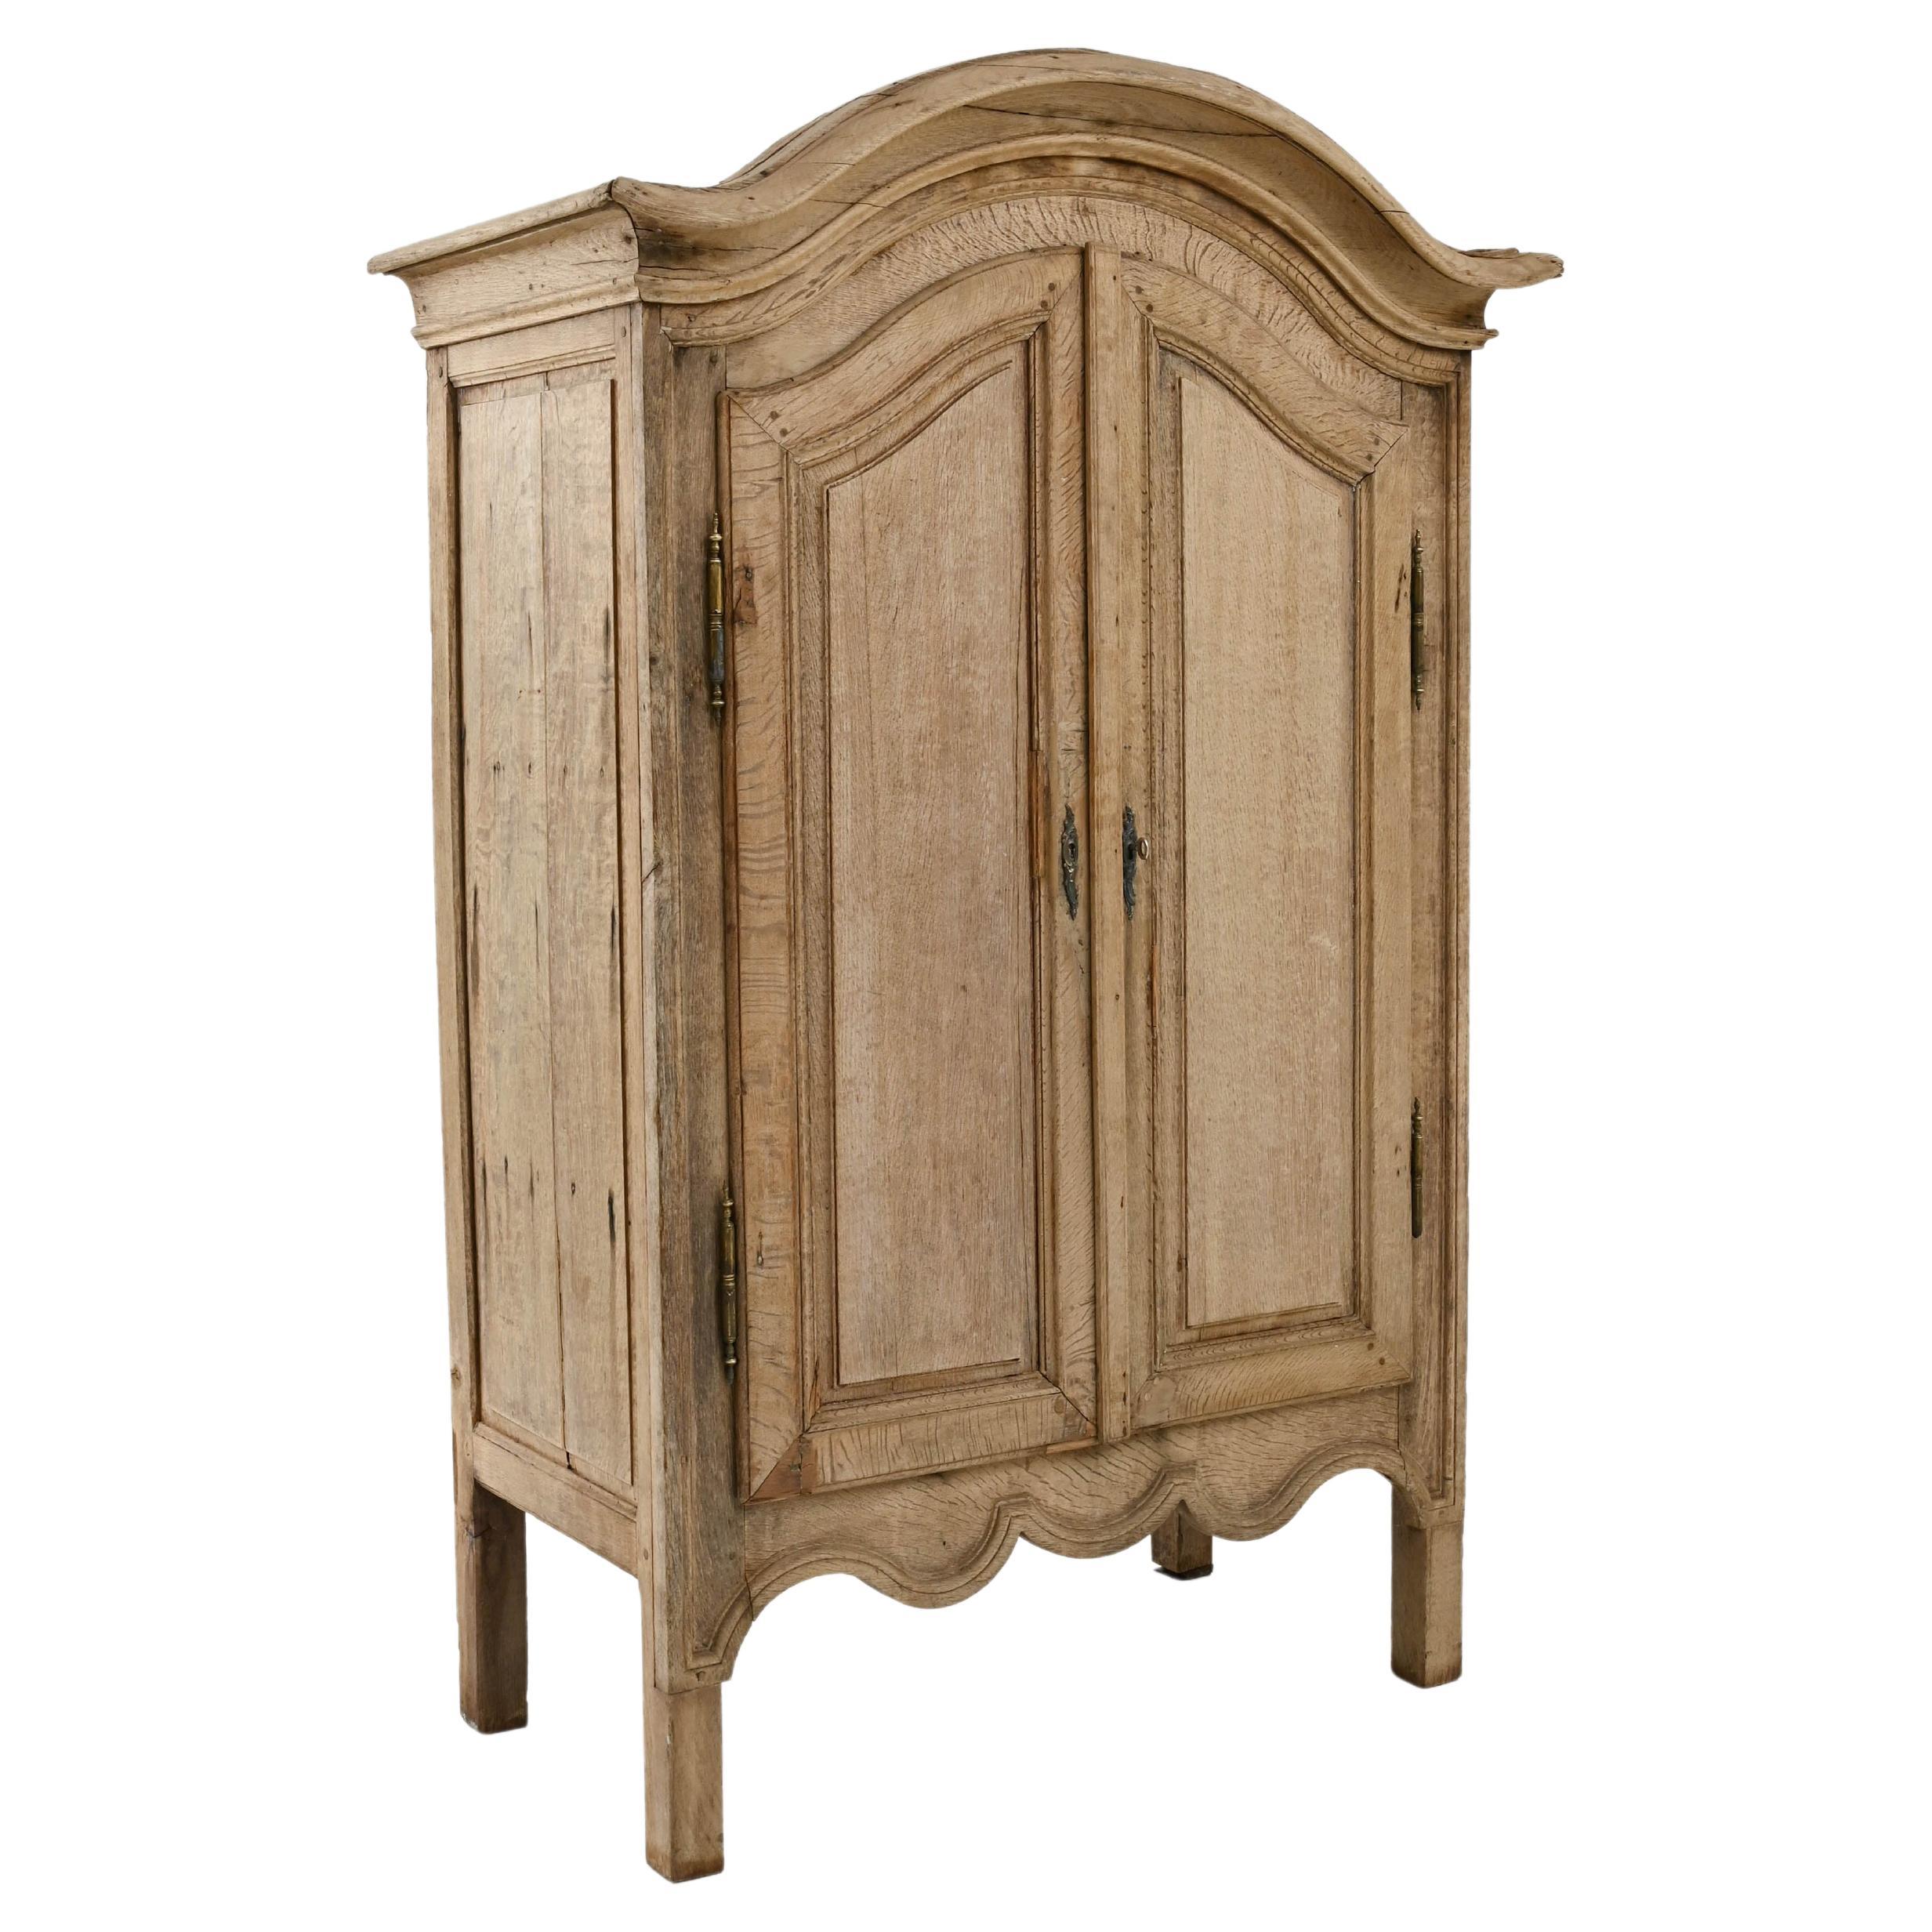 19th Century French Oak Cabinet